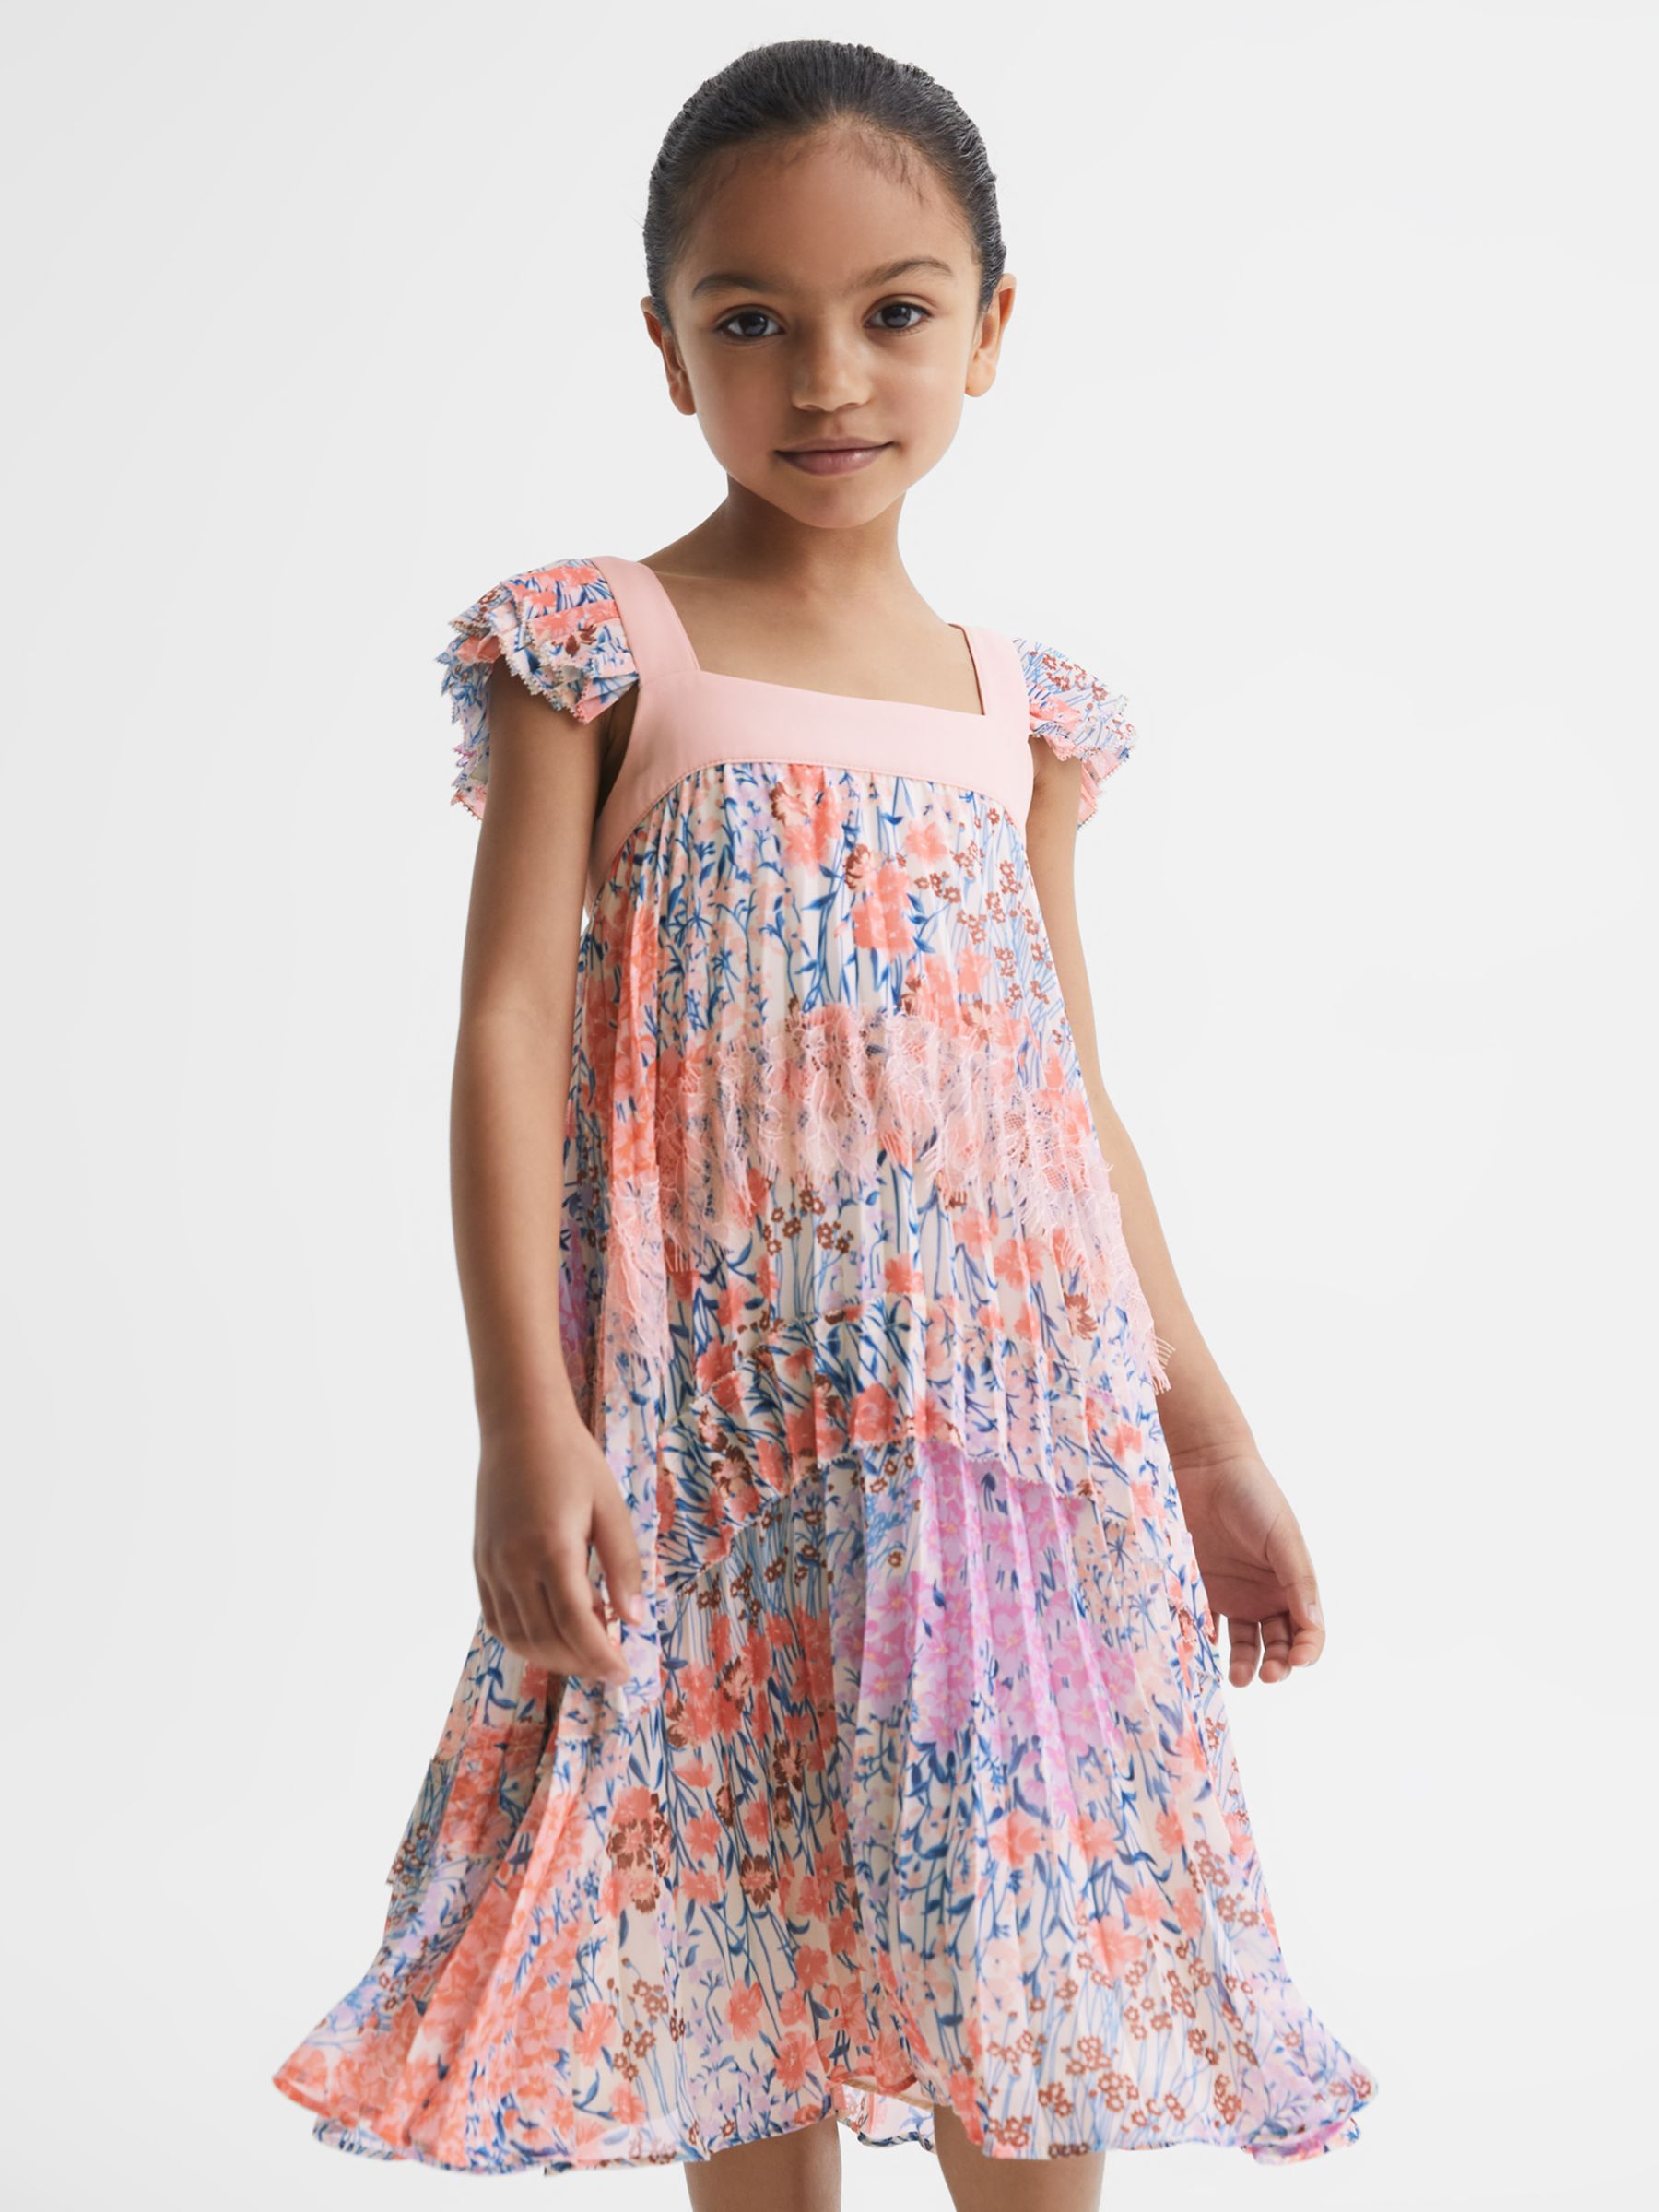 Reiss Kids' Aster Floral Print Dress, Pink/Multi